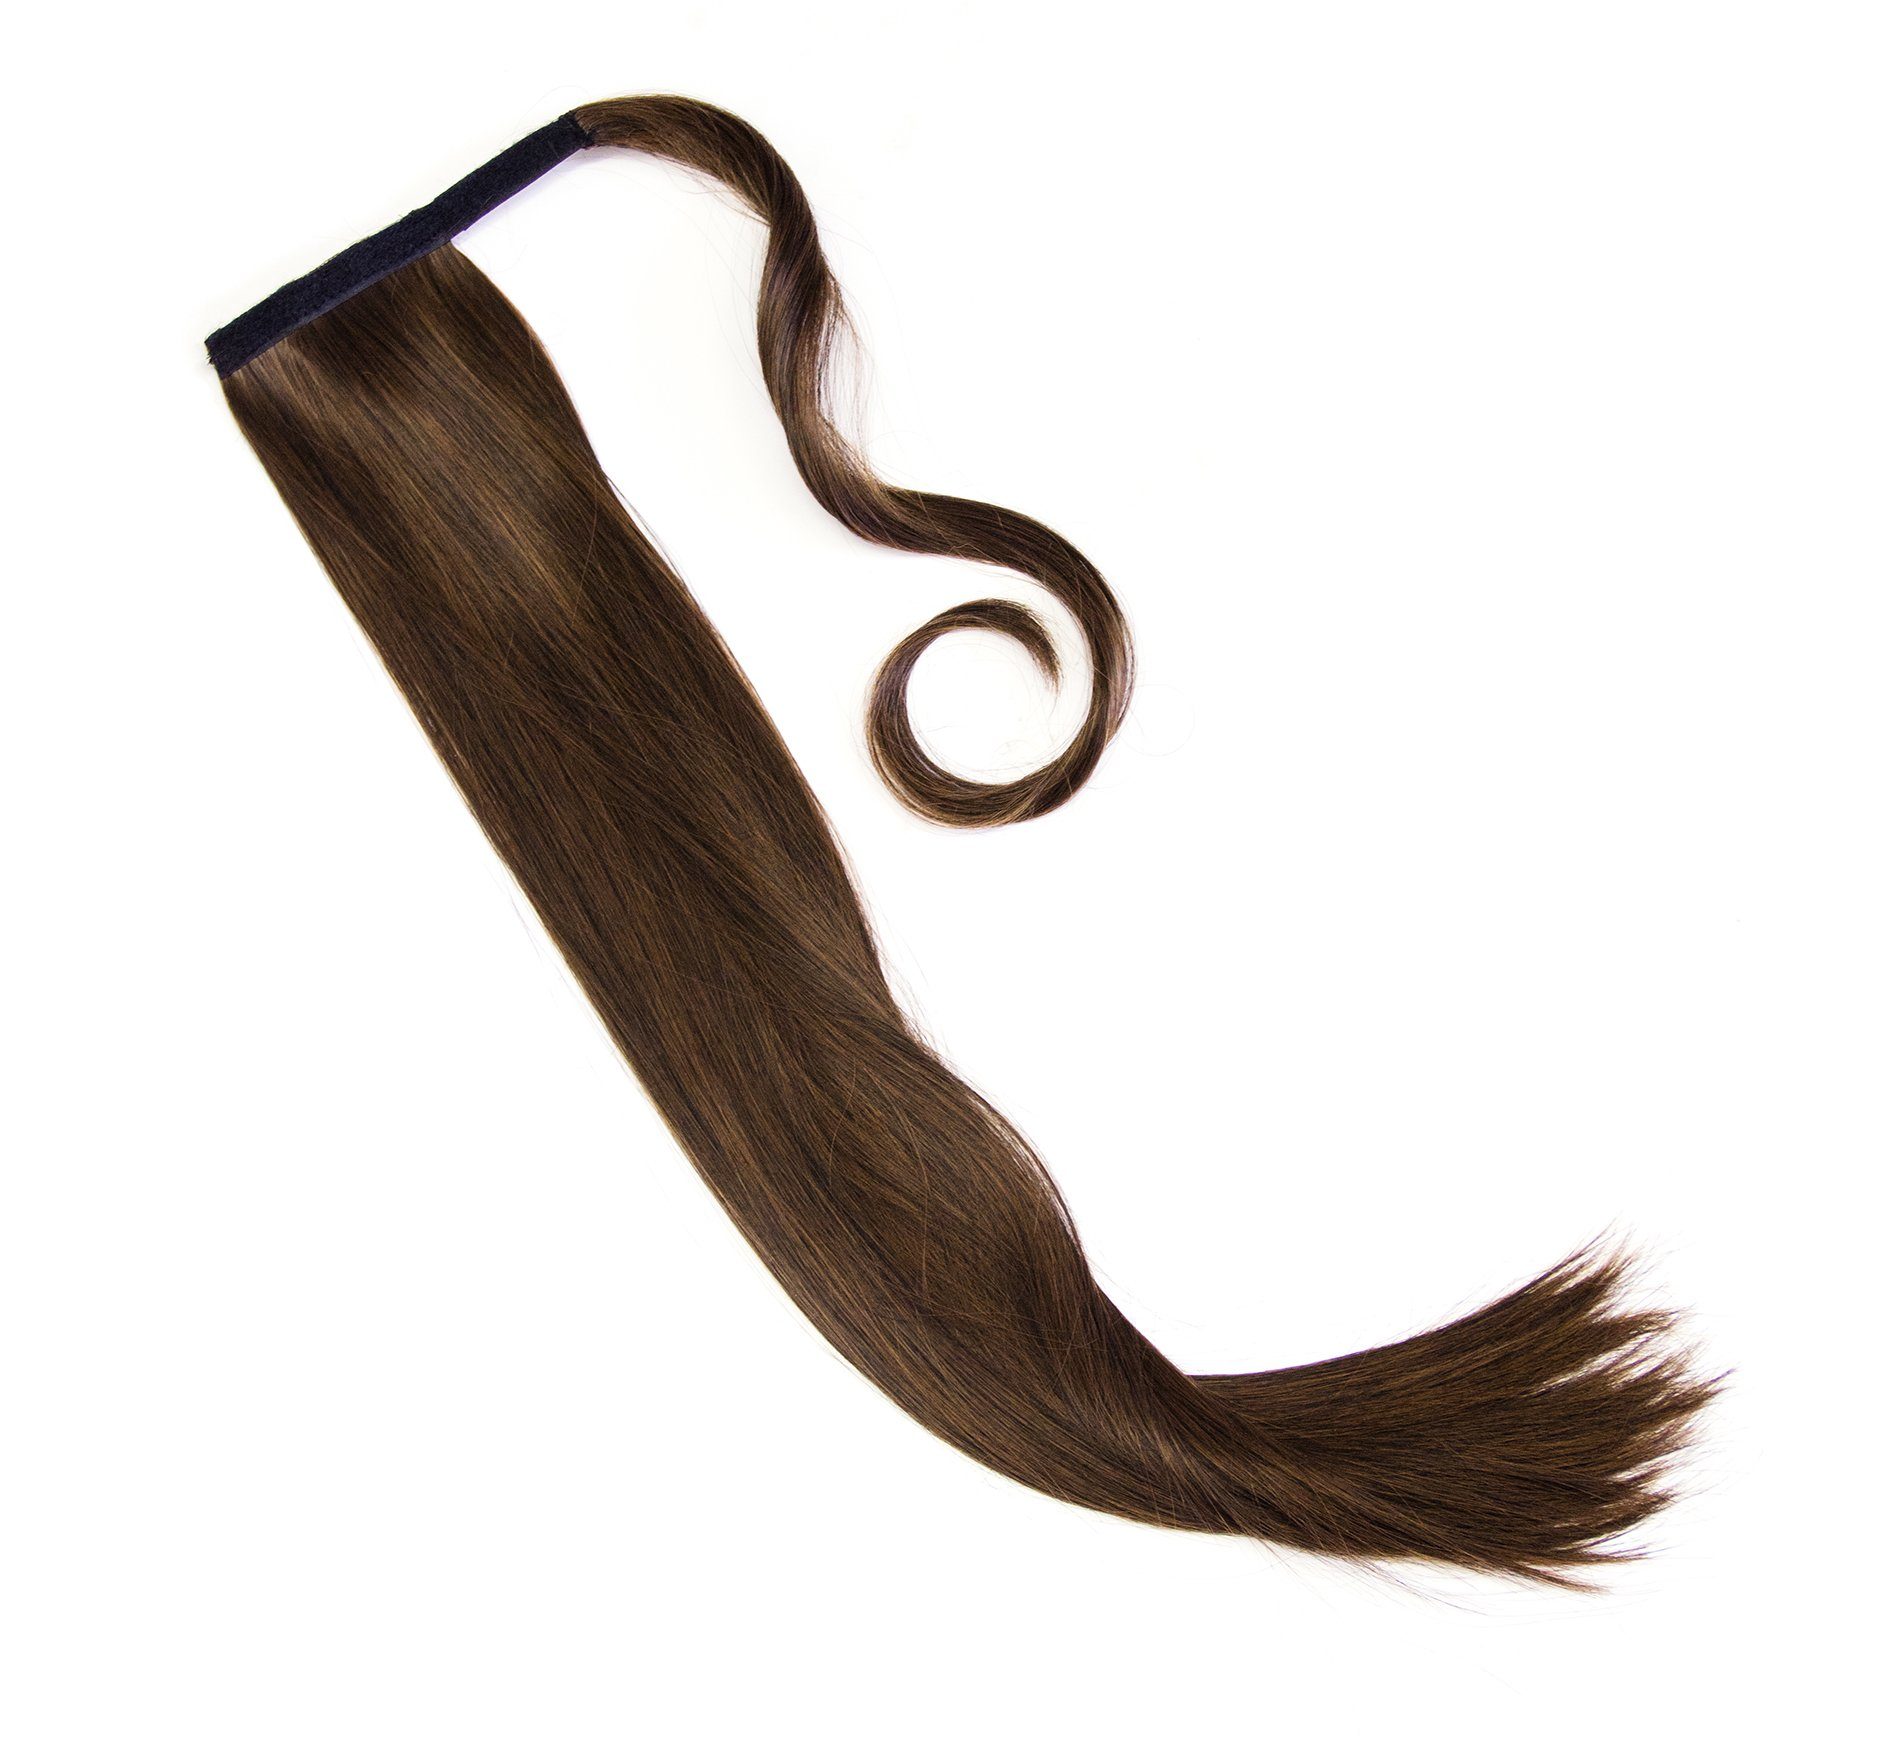 MyBeautyworld24 Haarclip Haarteil Haarverlängerung lange Haare Zopf Pferdeschwanz glatt 60 cm schwarz-braun